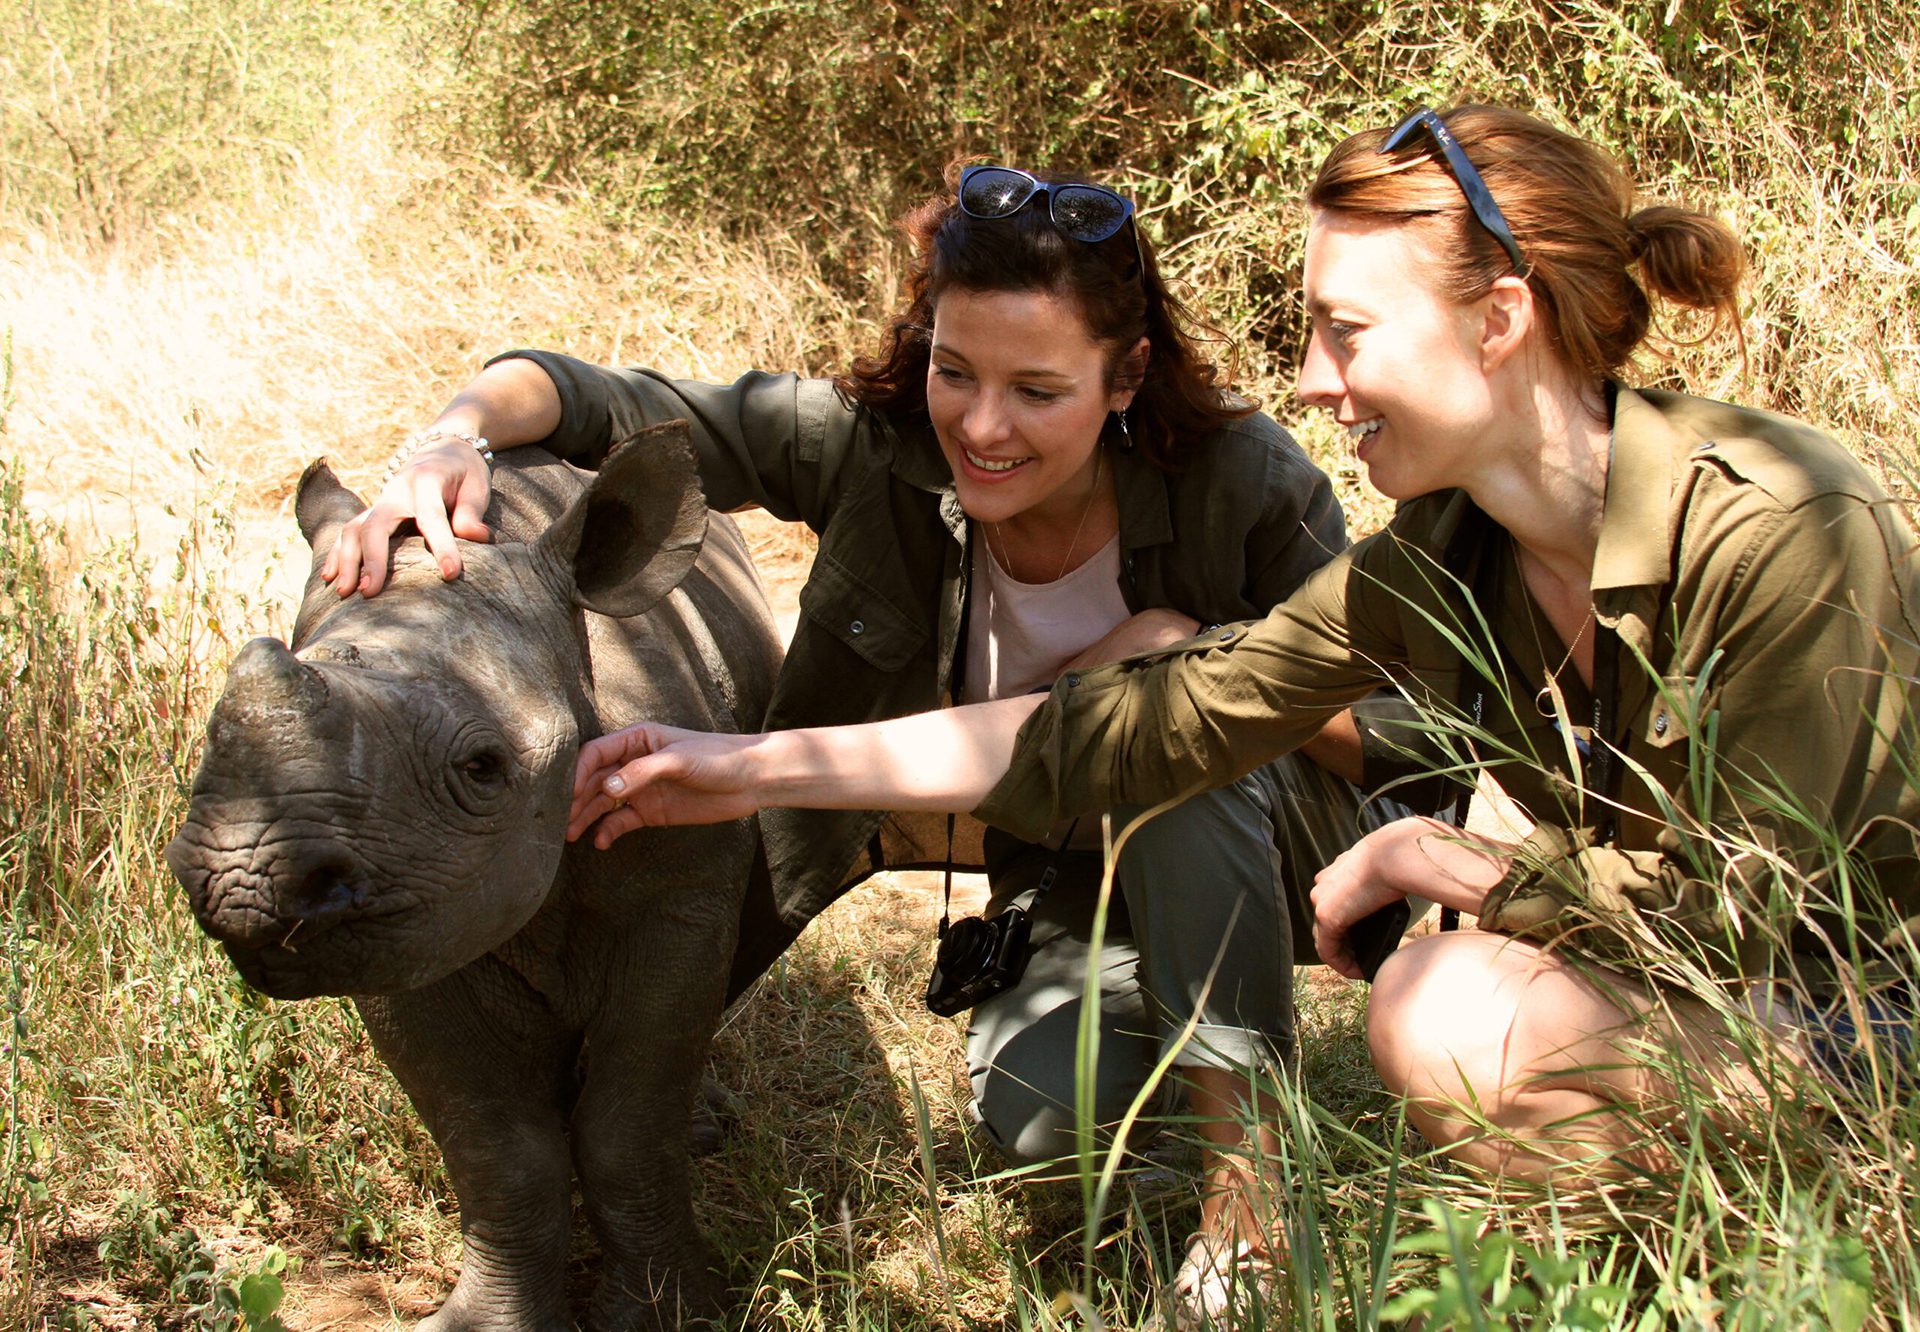 two women petting a baby rhino in a field.